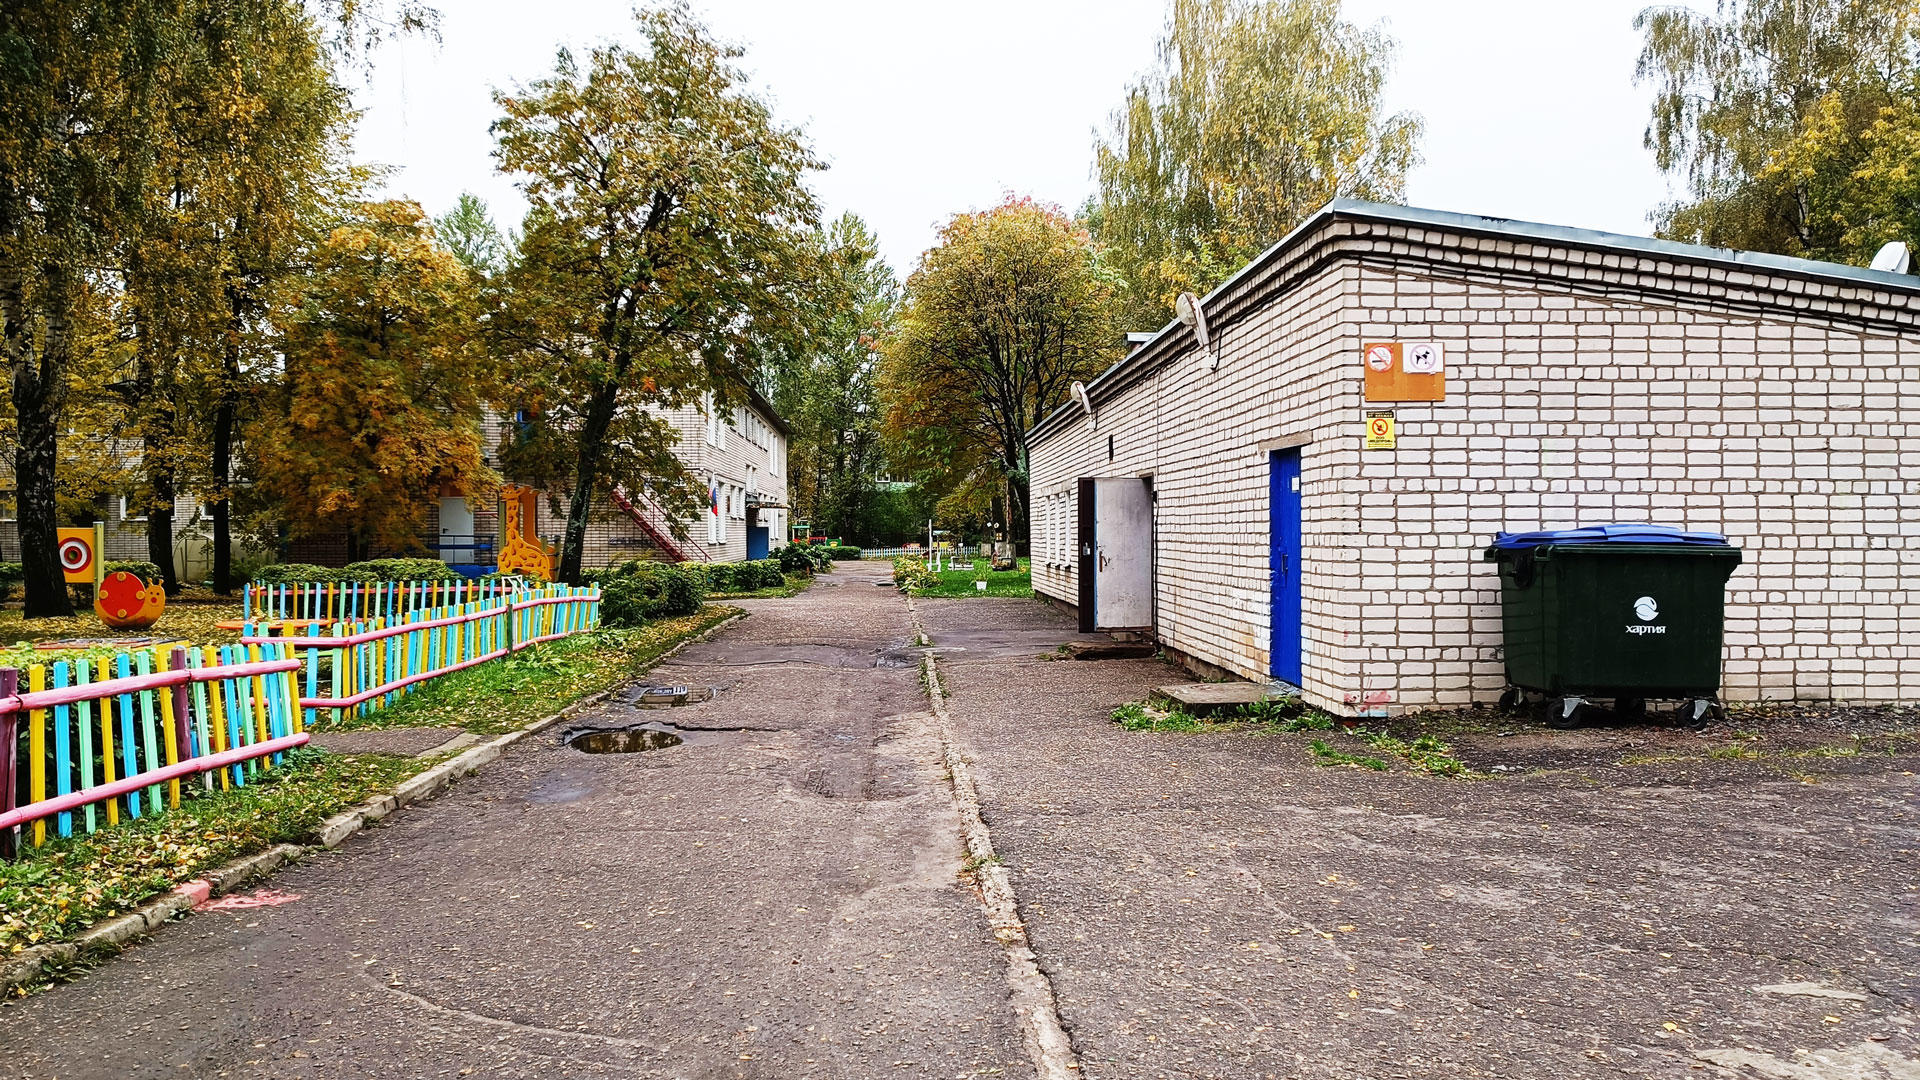 Детский сад 105 Ярославль: общий вид территории.